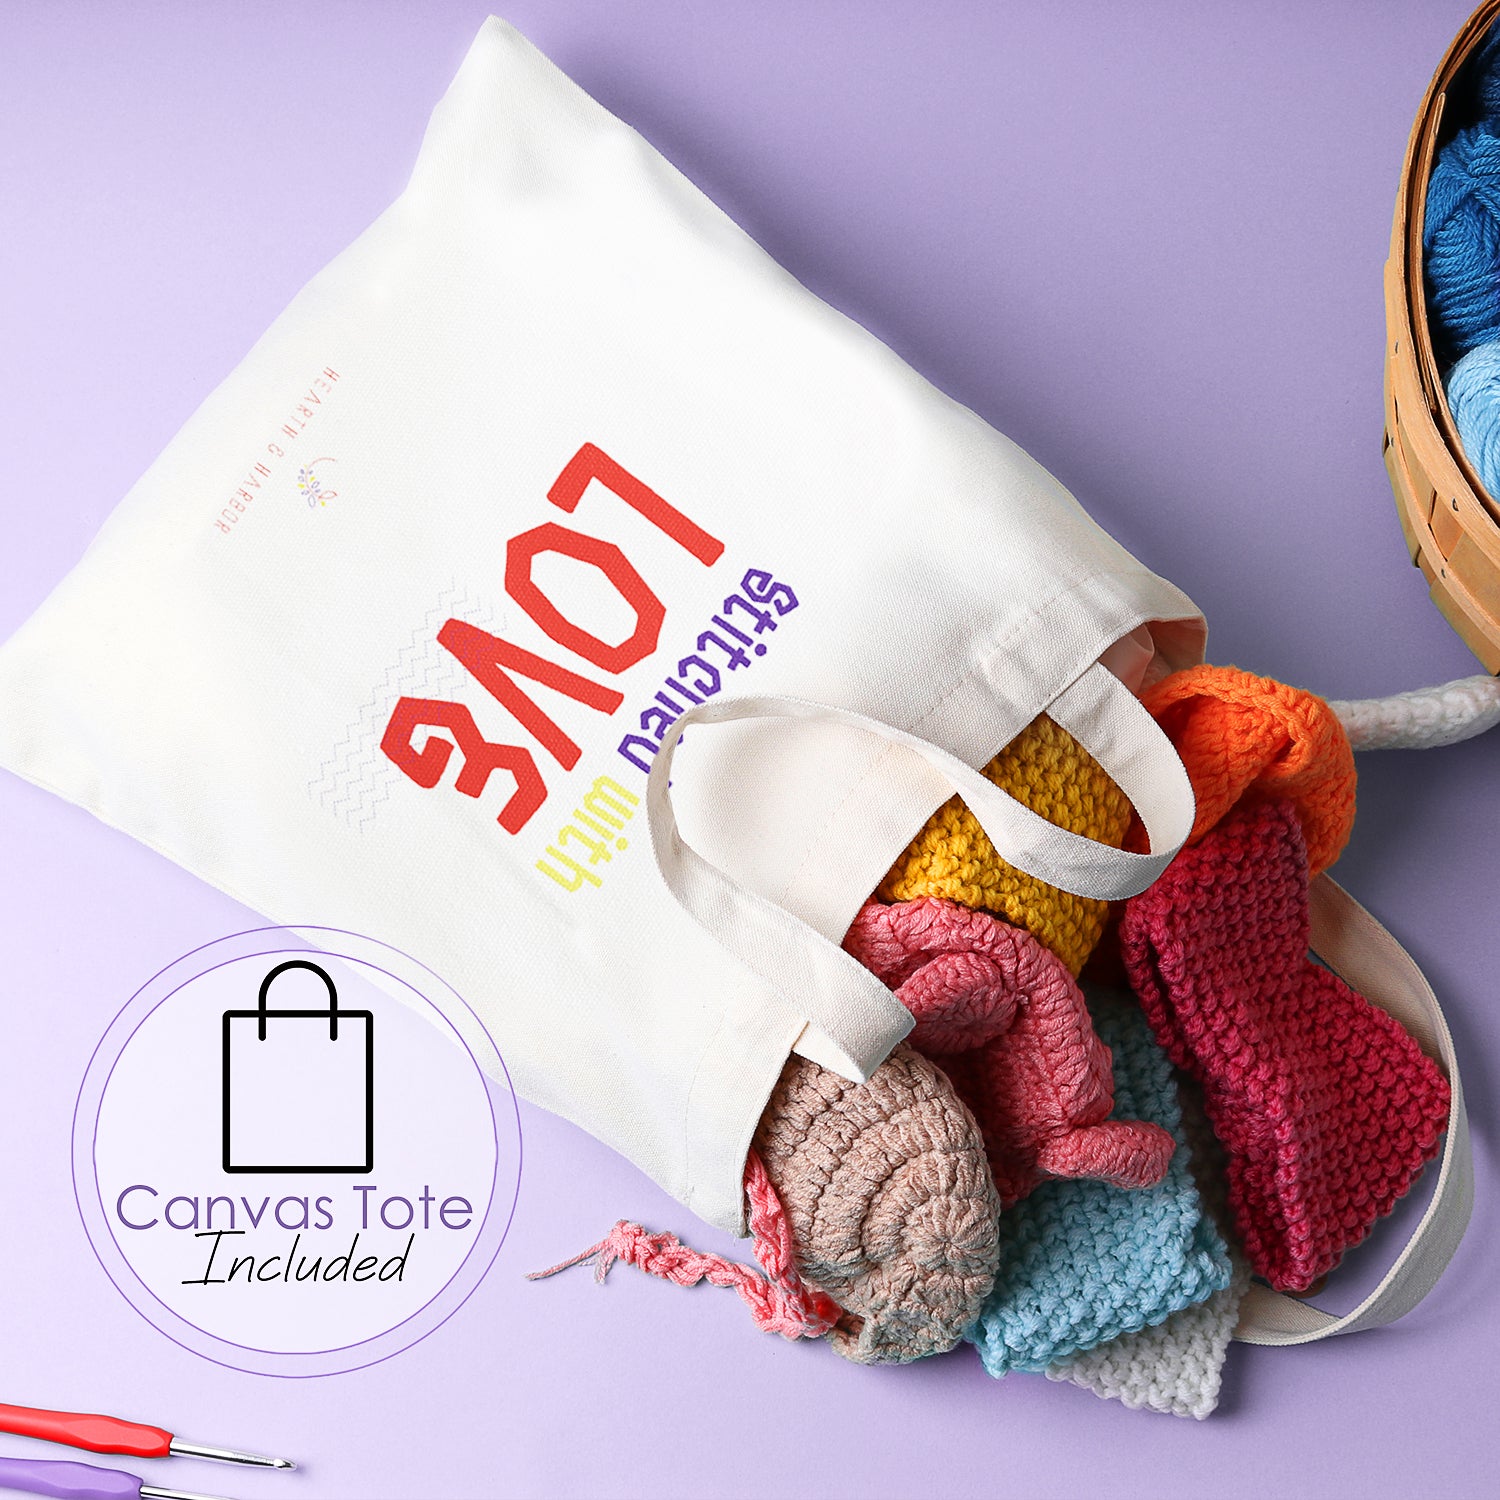 Hearth & Harbor Crochet Kit with Digital Counting Crochet Hook Set